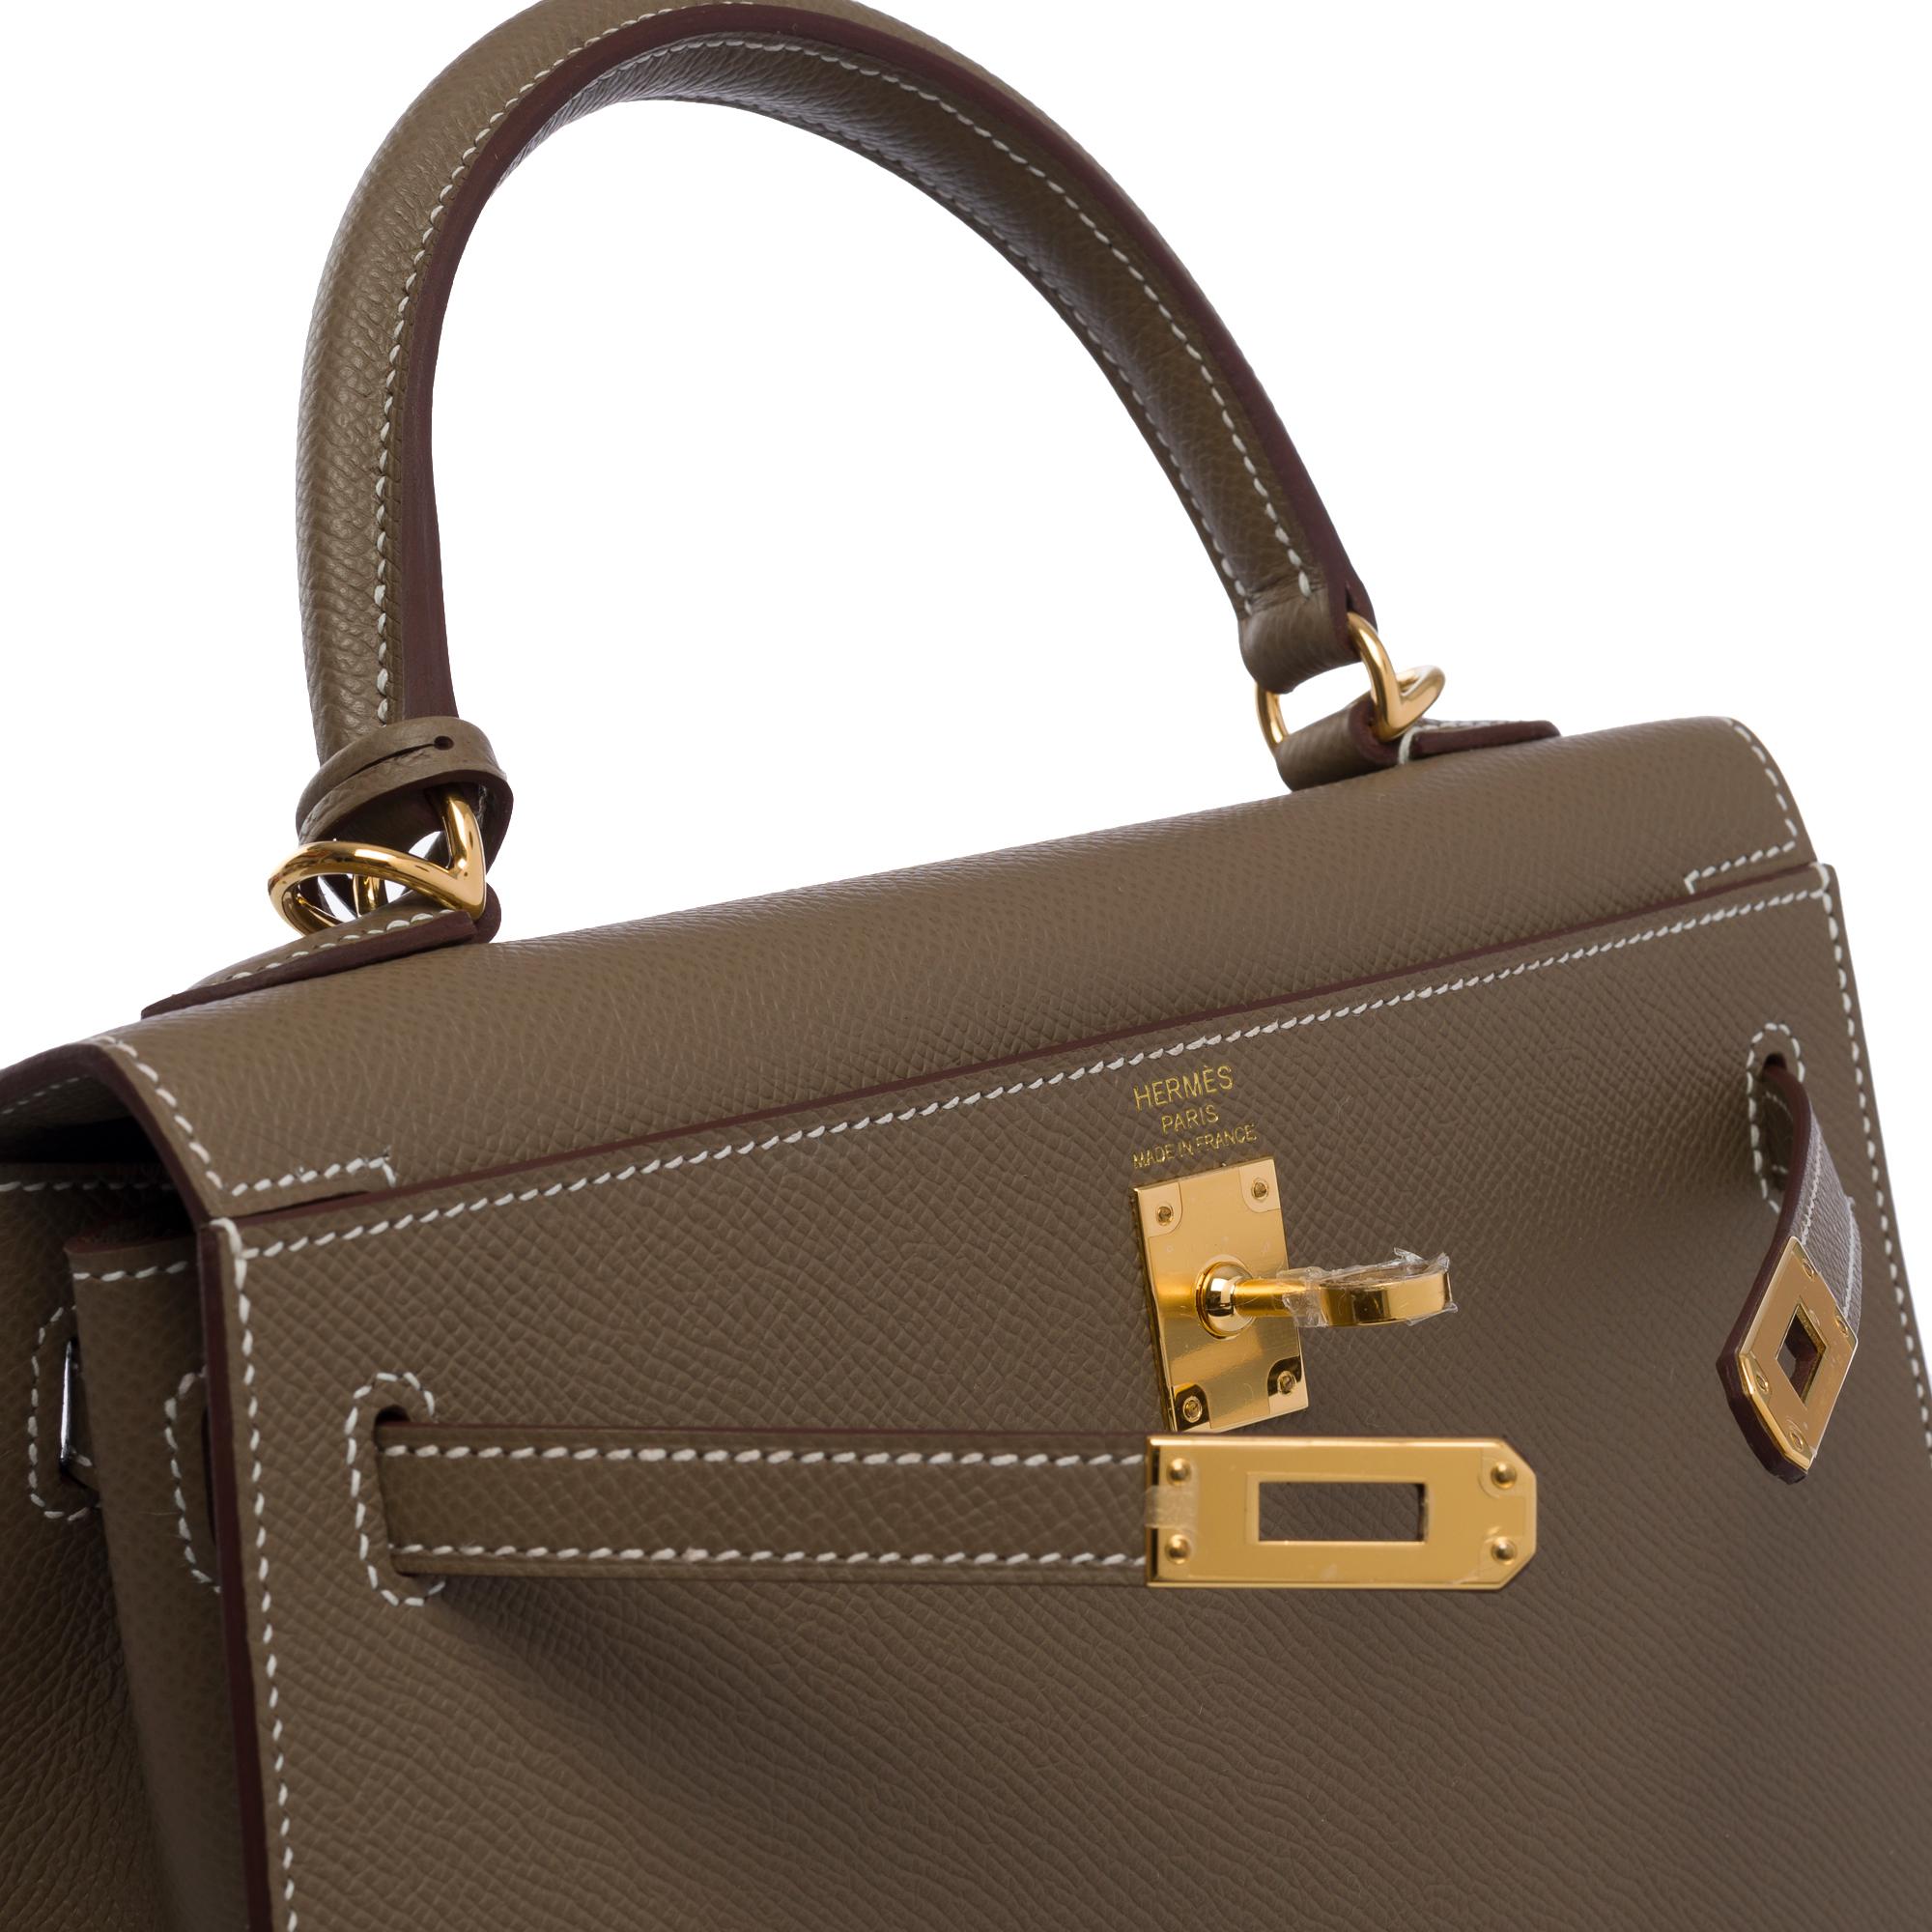 New Amazing Hermès Kelly 25 handbag strap in Etoupe epsom leather, GHW 1